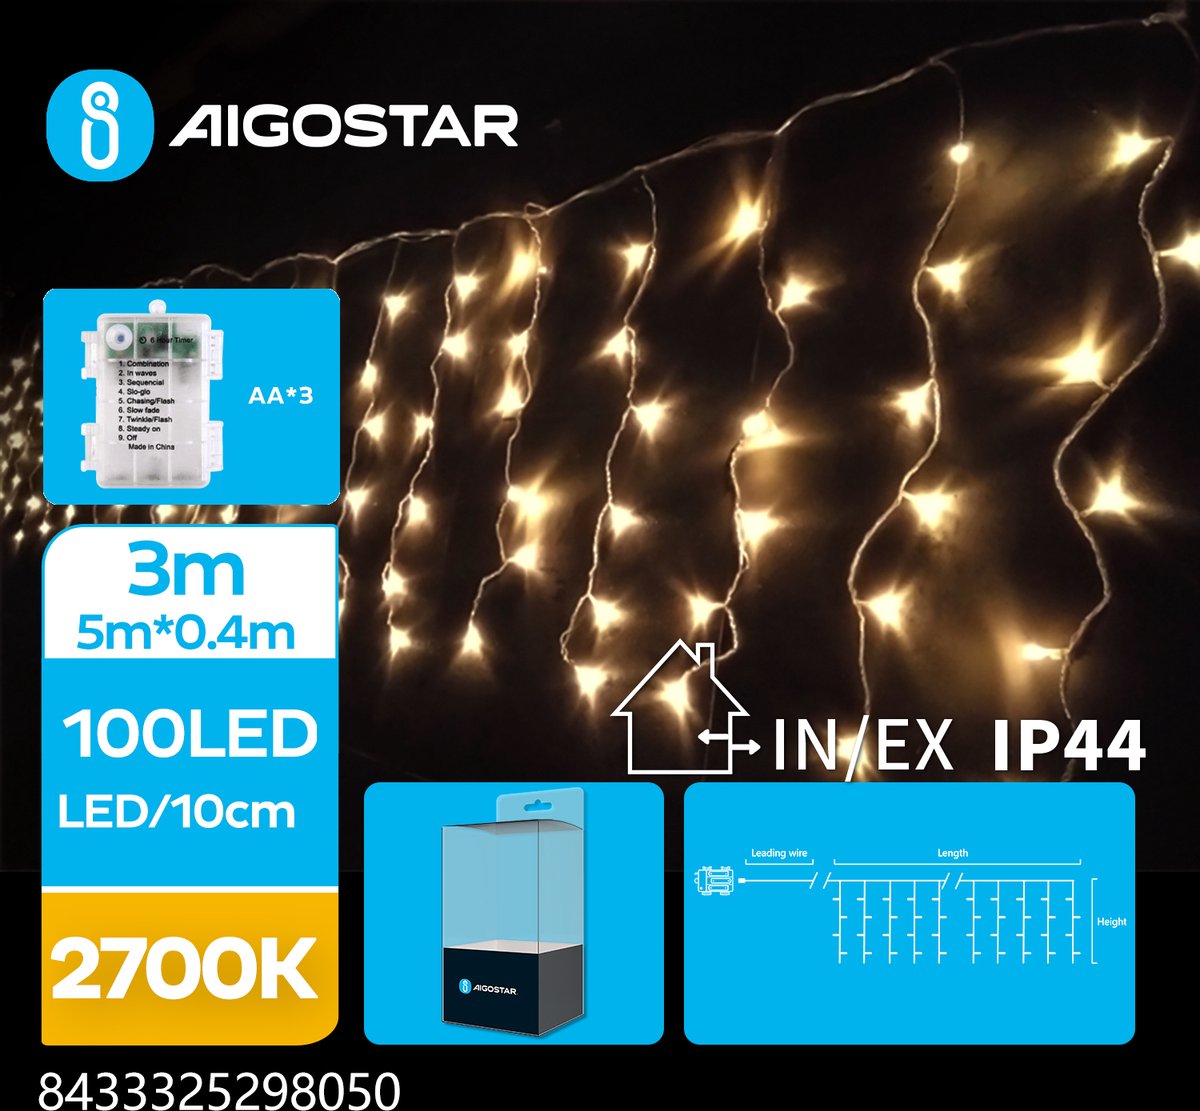 Aigostar - LED Ijspegel lichtslinger - 100 LEDS - 2700K - Warm wit licht - 5 meter - IP44 - 3x AA batterij